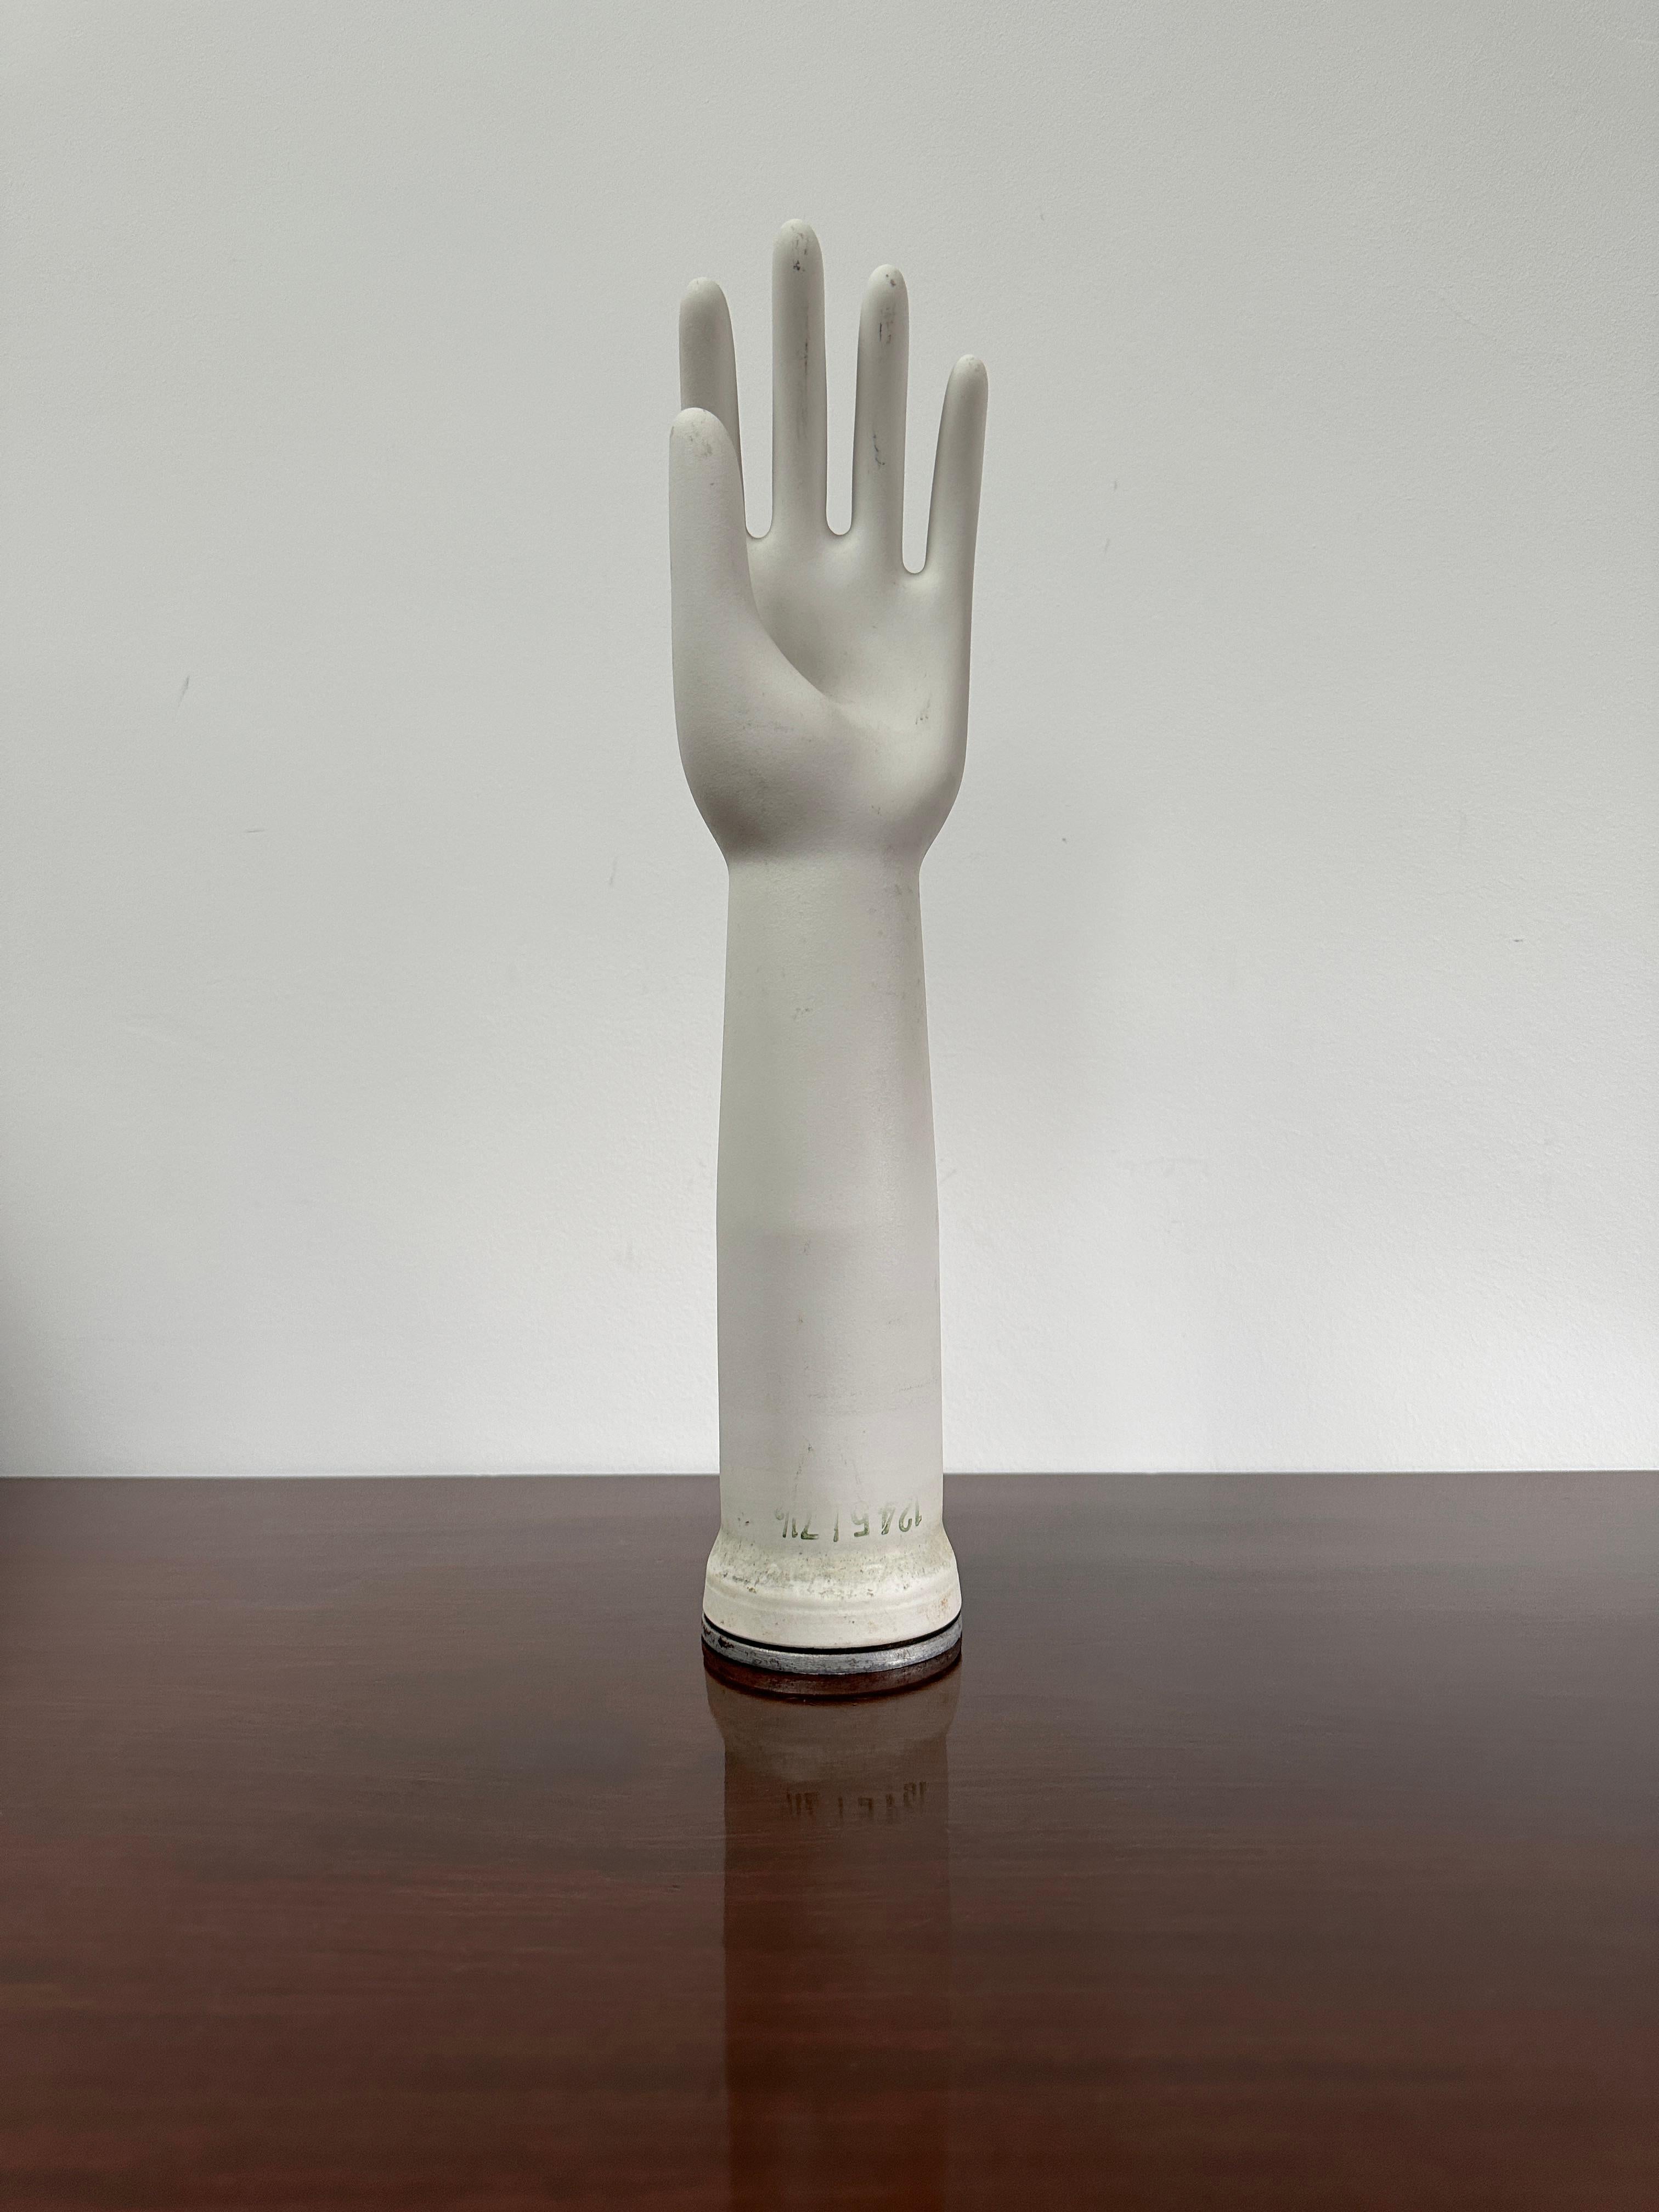 Pair Vintage Antique Industrial Decorative Ceramic Glove Mould Hand Sculpture 1